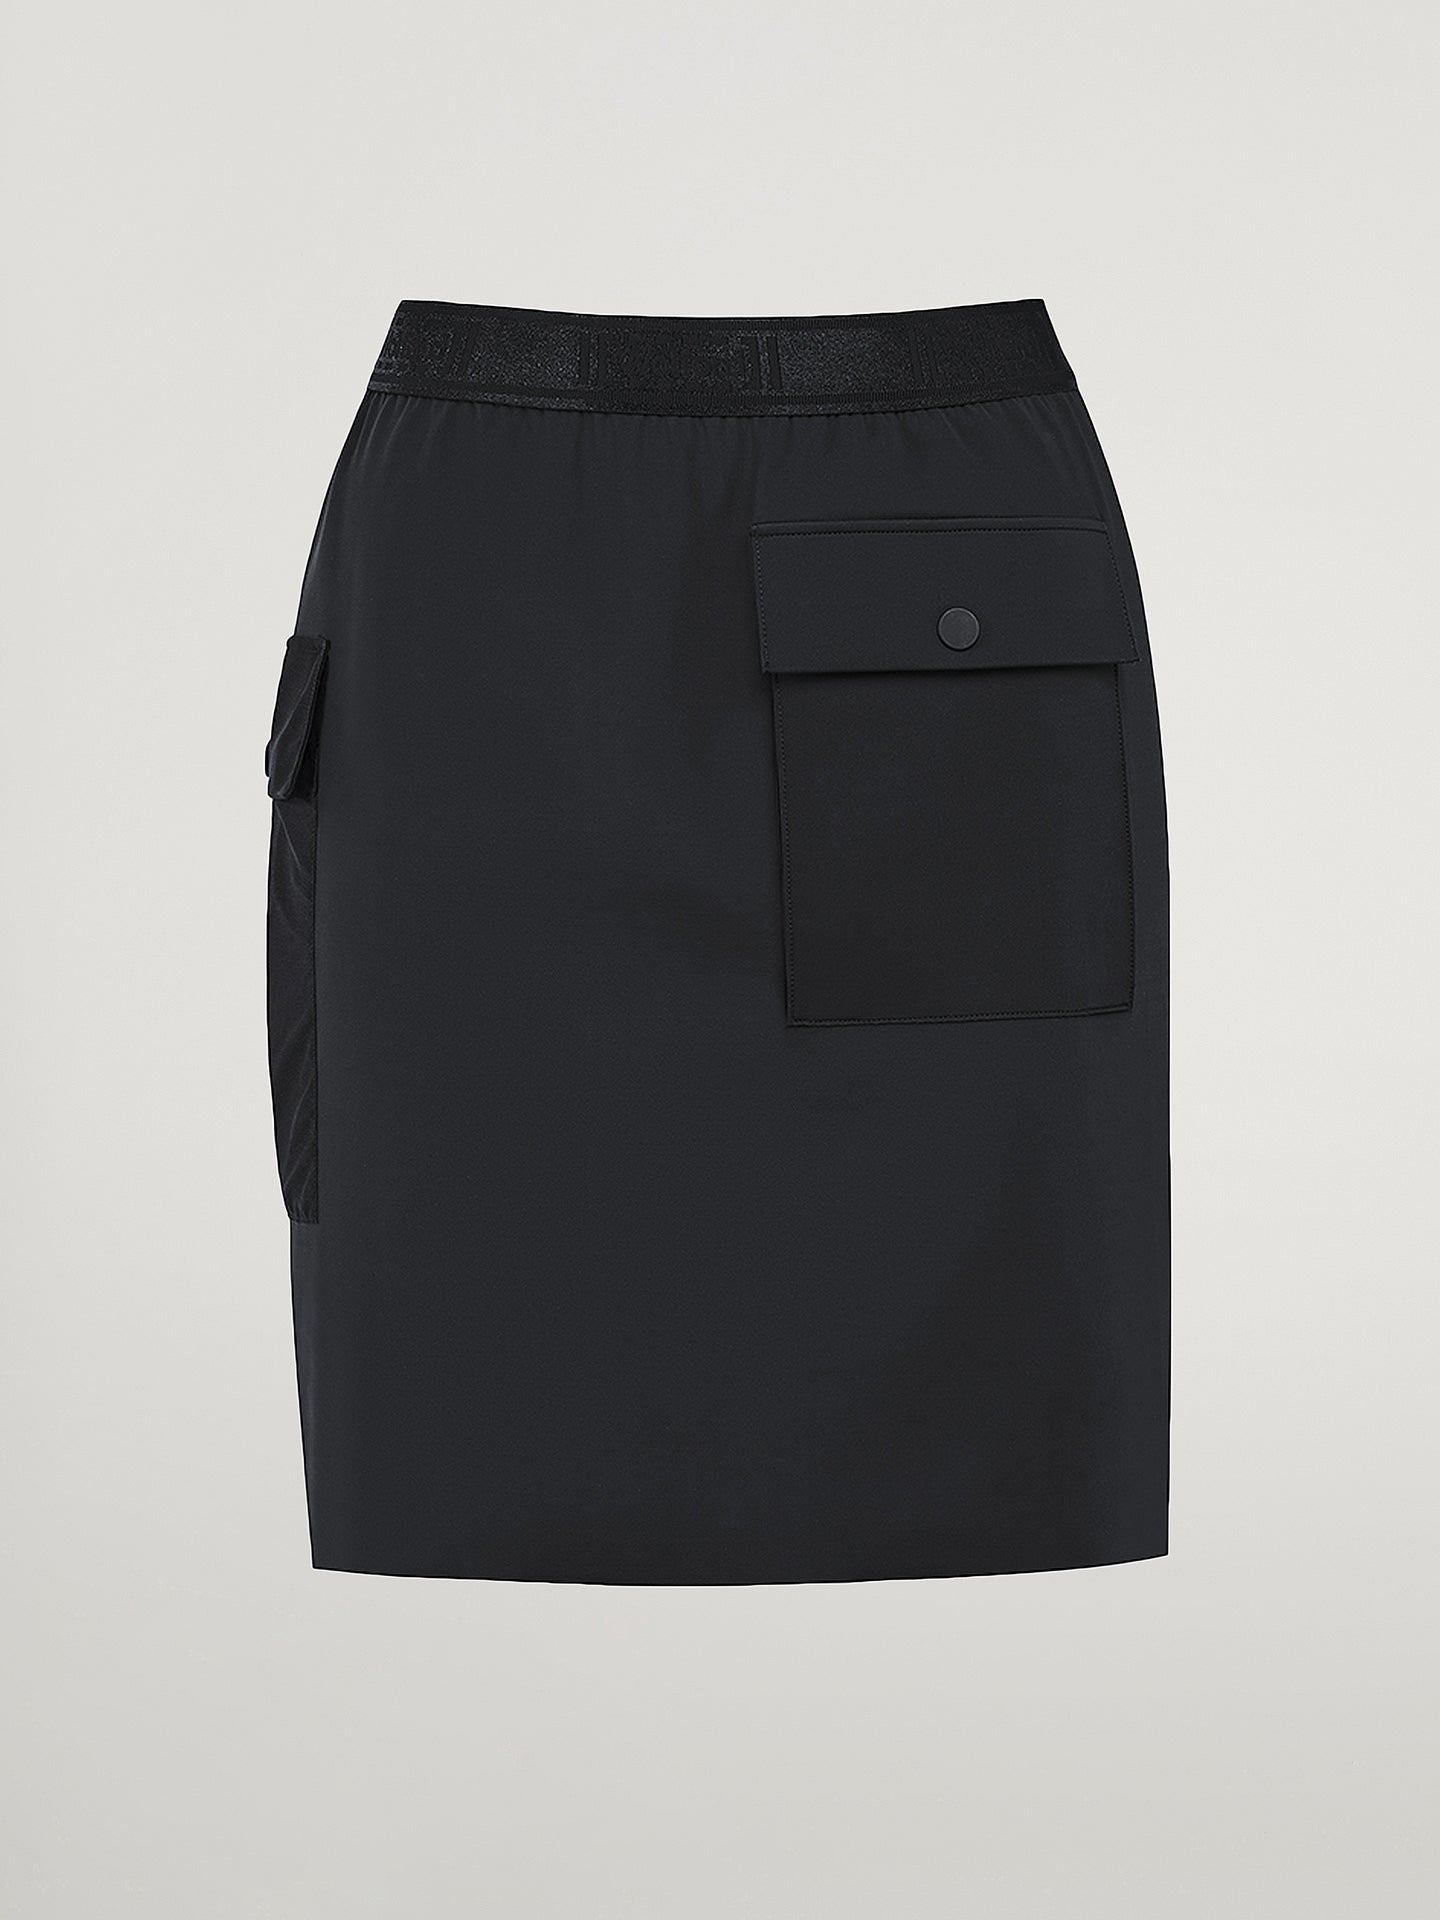 Blair Skirt-Kleider & Röcke-Wolford-OUTLET-ARCHIVIST